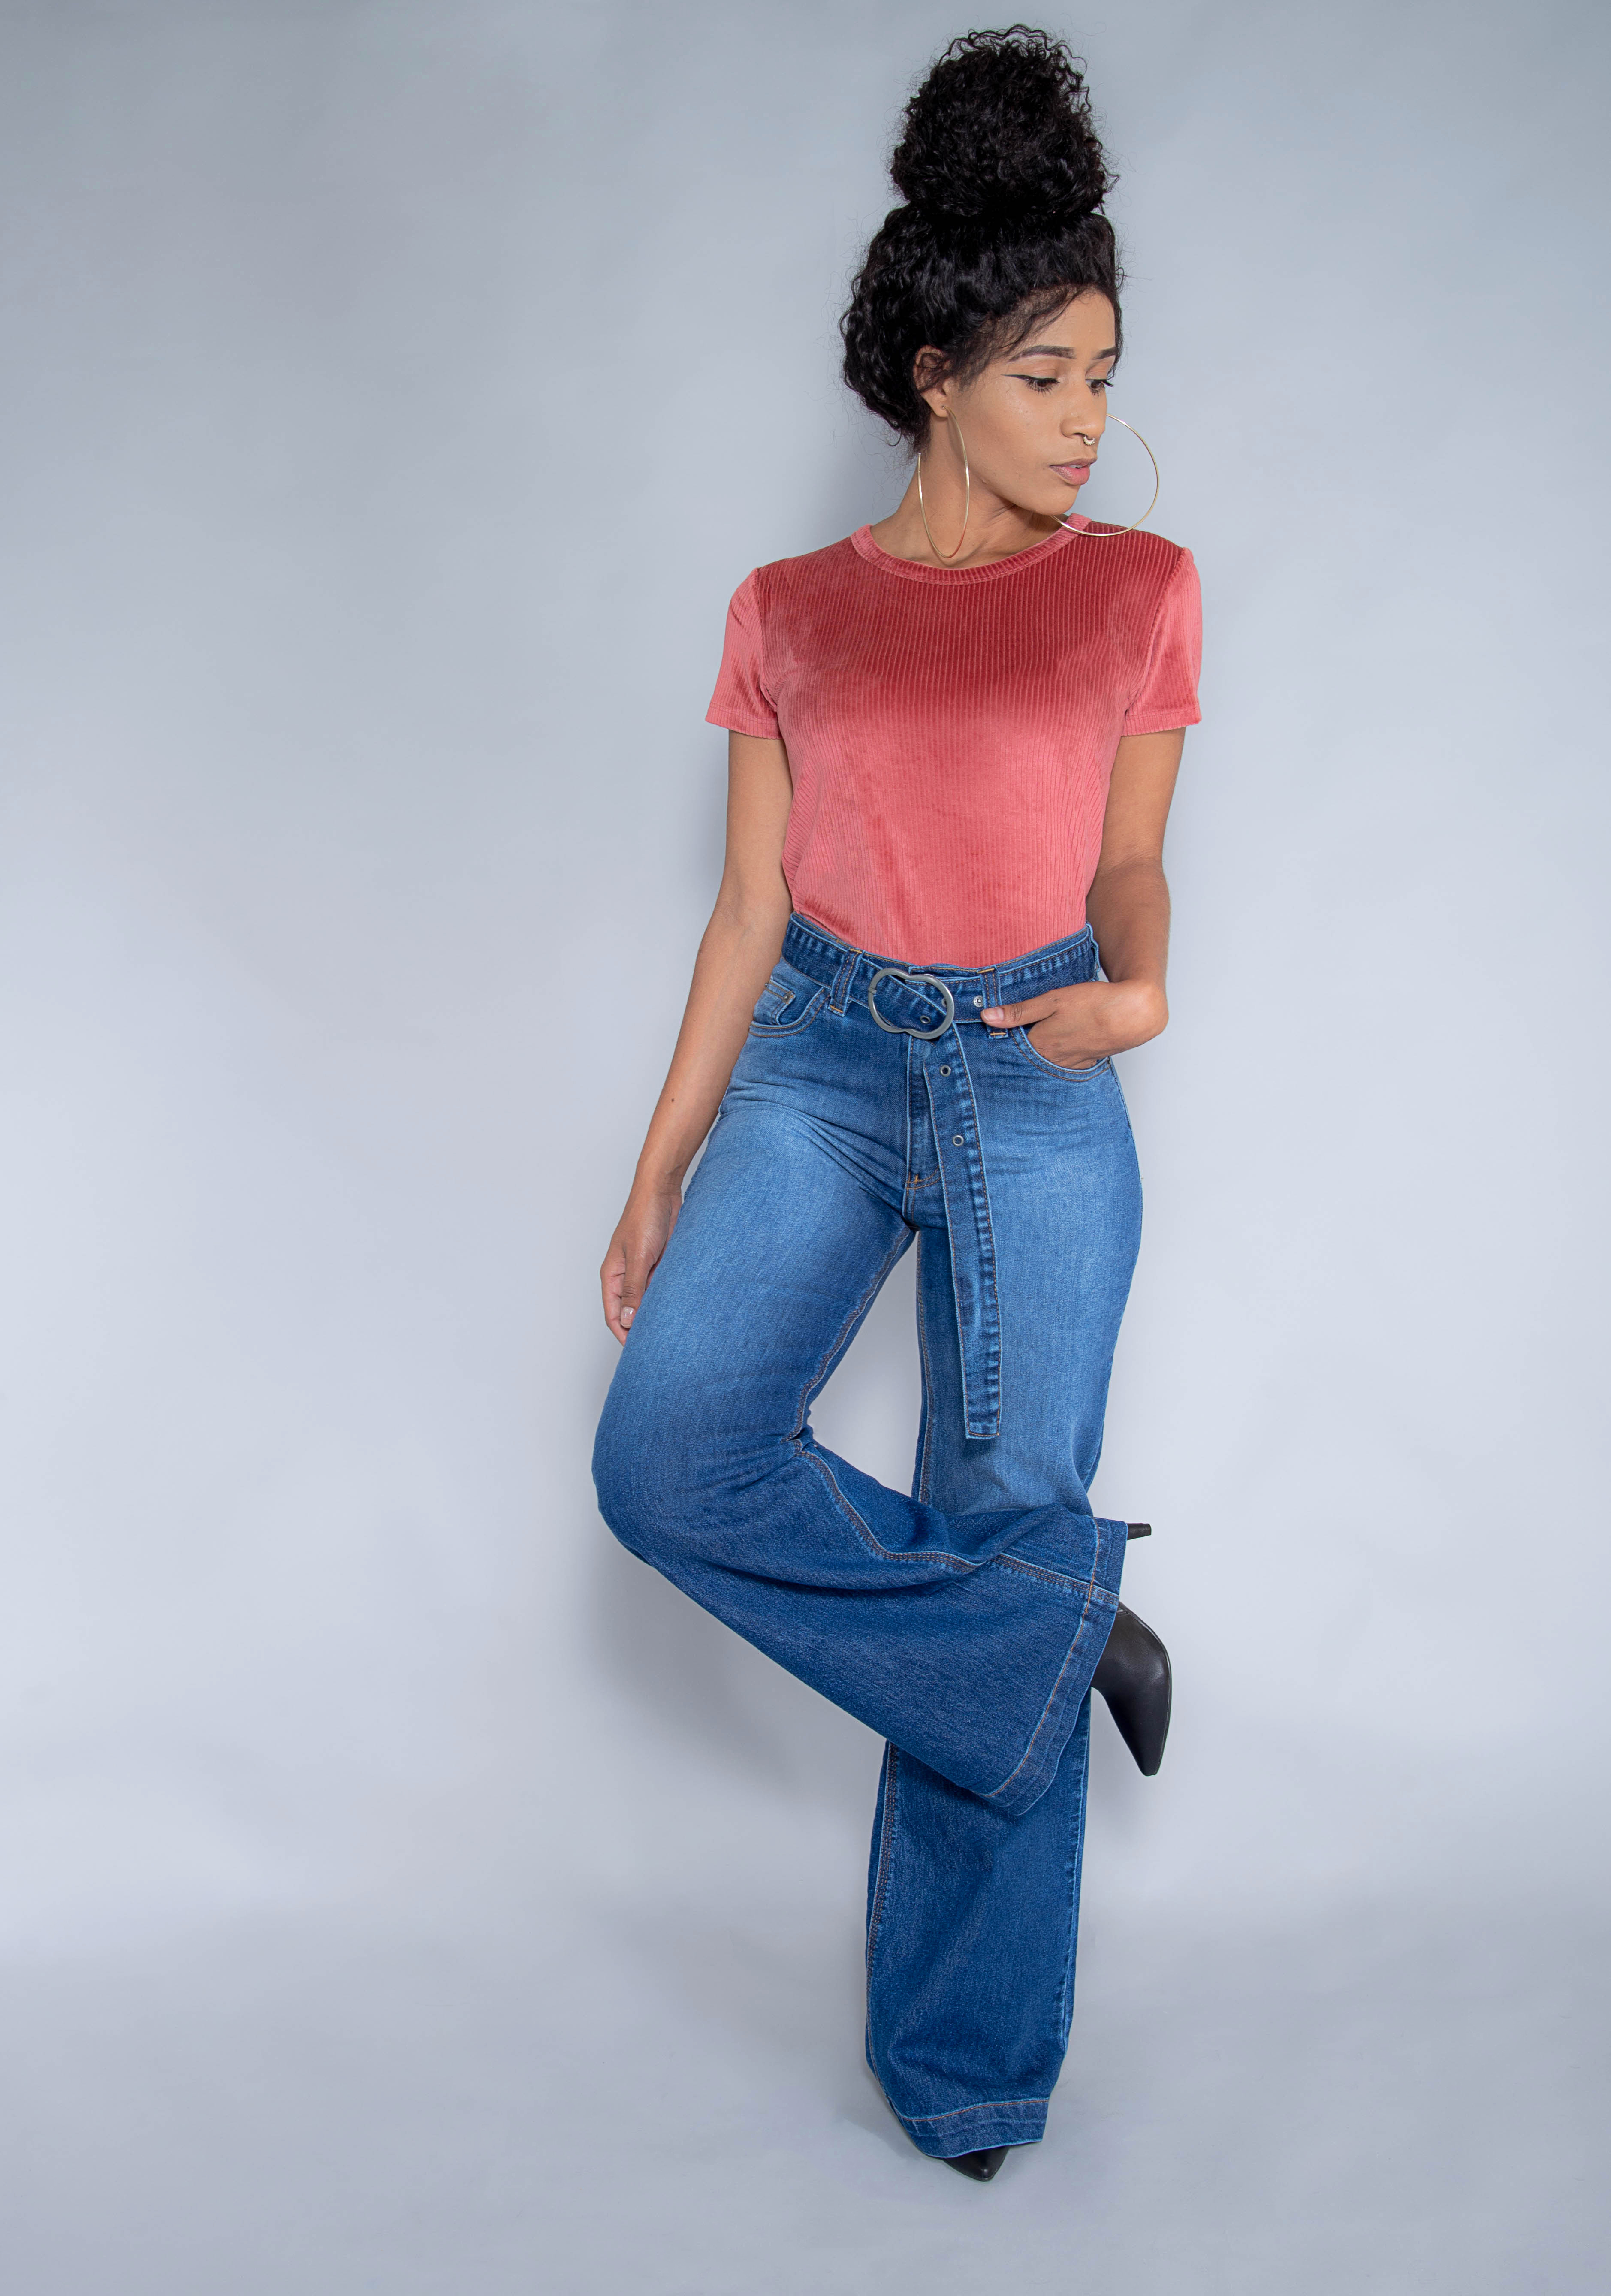 tendências jeans 2019